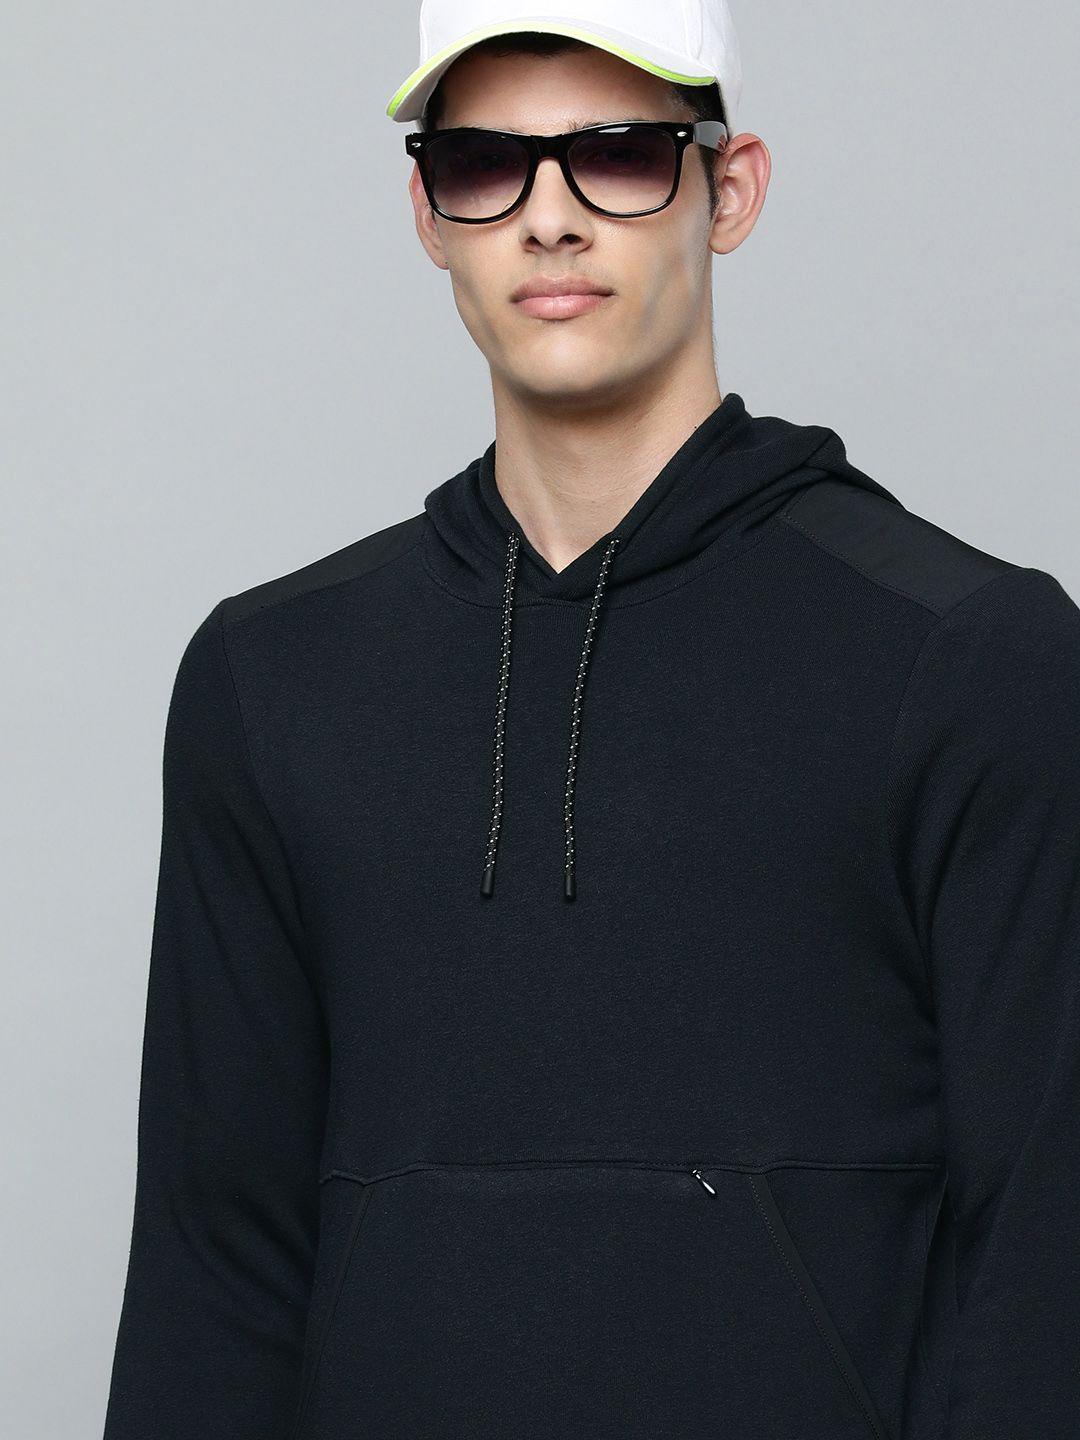 skechers-men-black-solid-sweats-utility-hooded-sweatshirt